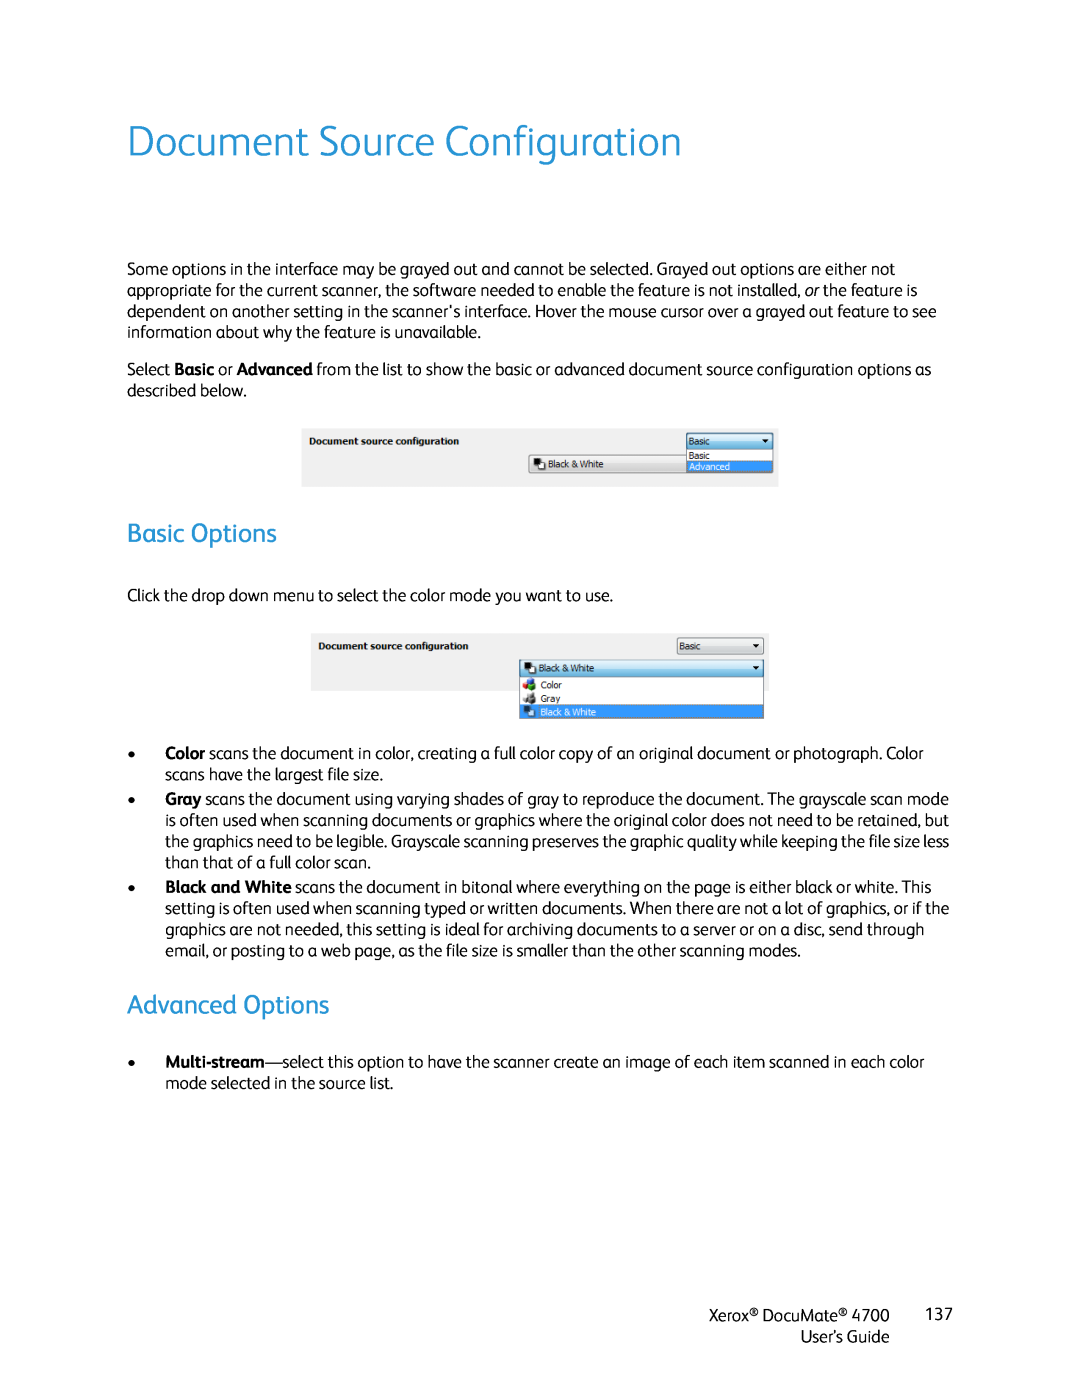 Xerox 4700 manual Document Source Configuration, Basic Options, Advanced Options 